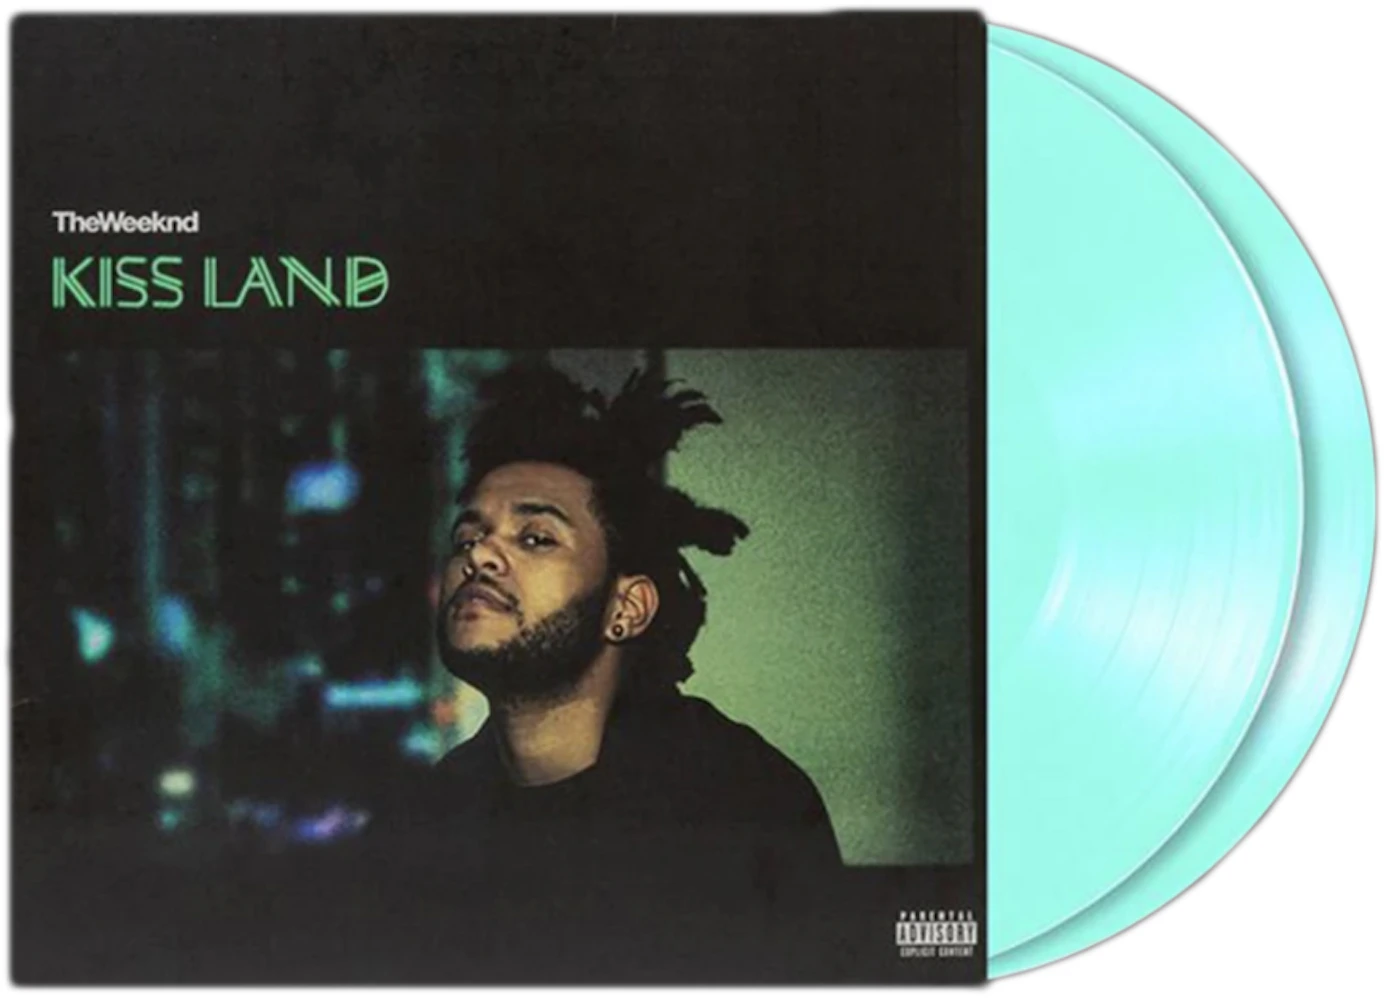 Vinile The Weeknd Kiss Land Limited Edition 2XLP verde trasparente